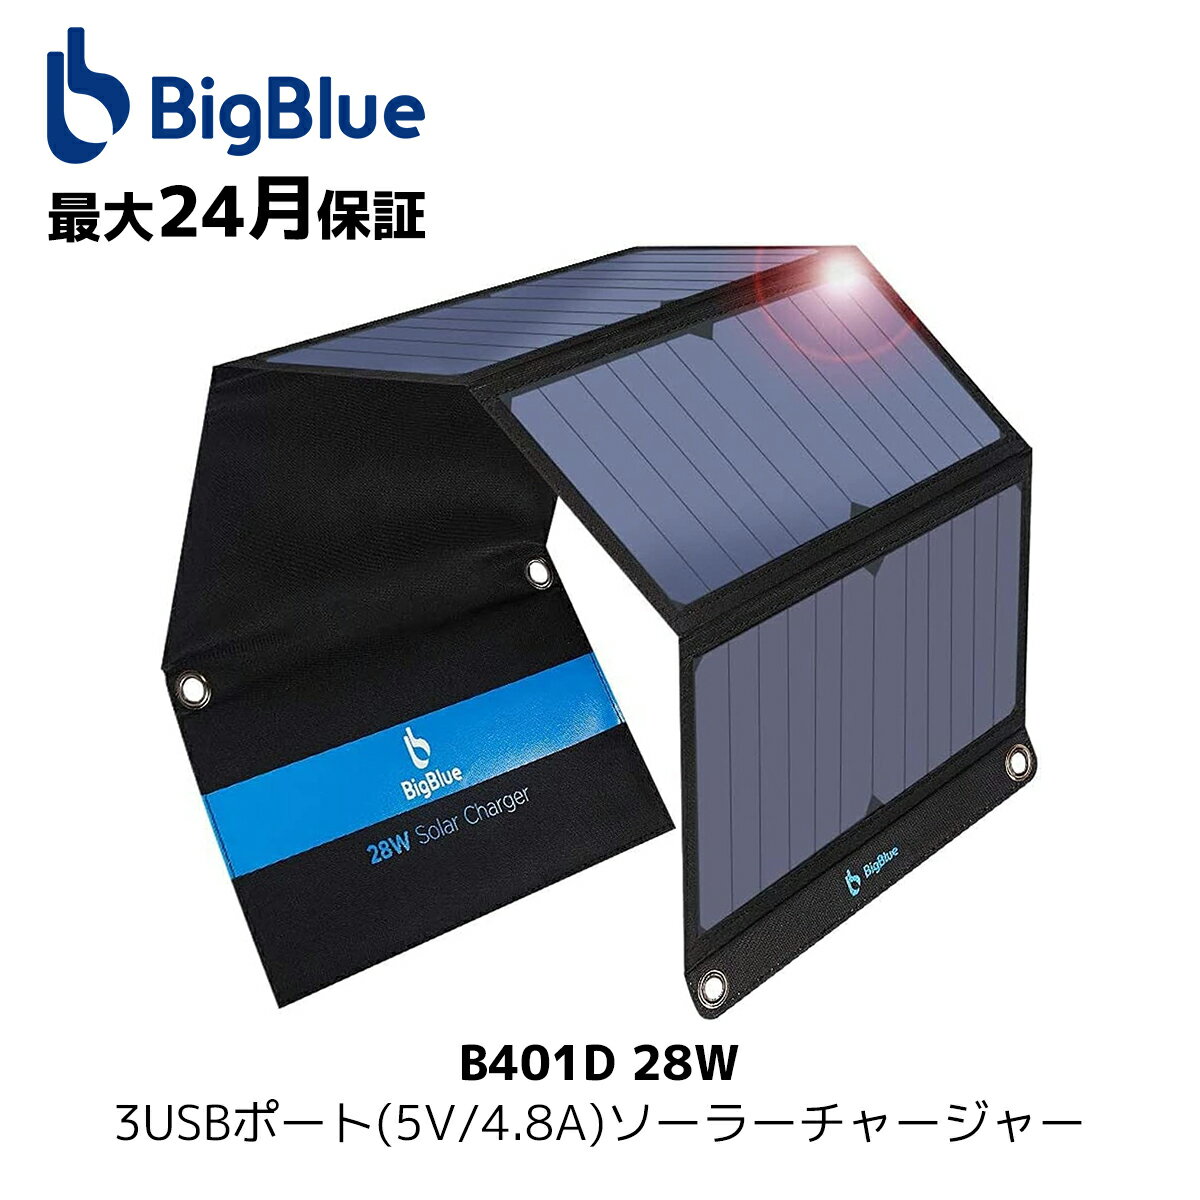 BigBlue 28W ソーラーパネル 小型 3USBポート(5V/4.8A) ソーラー充電器ソーラーチャージャー 折り畳み式 Sunpower IPX4 防水 地震 災害時 アウトドア iPhone iPad Android Samsung Galaxy LG対応 (B401-28W)